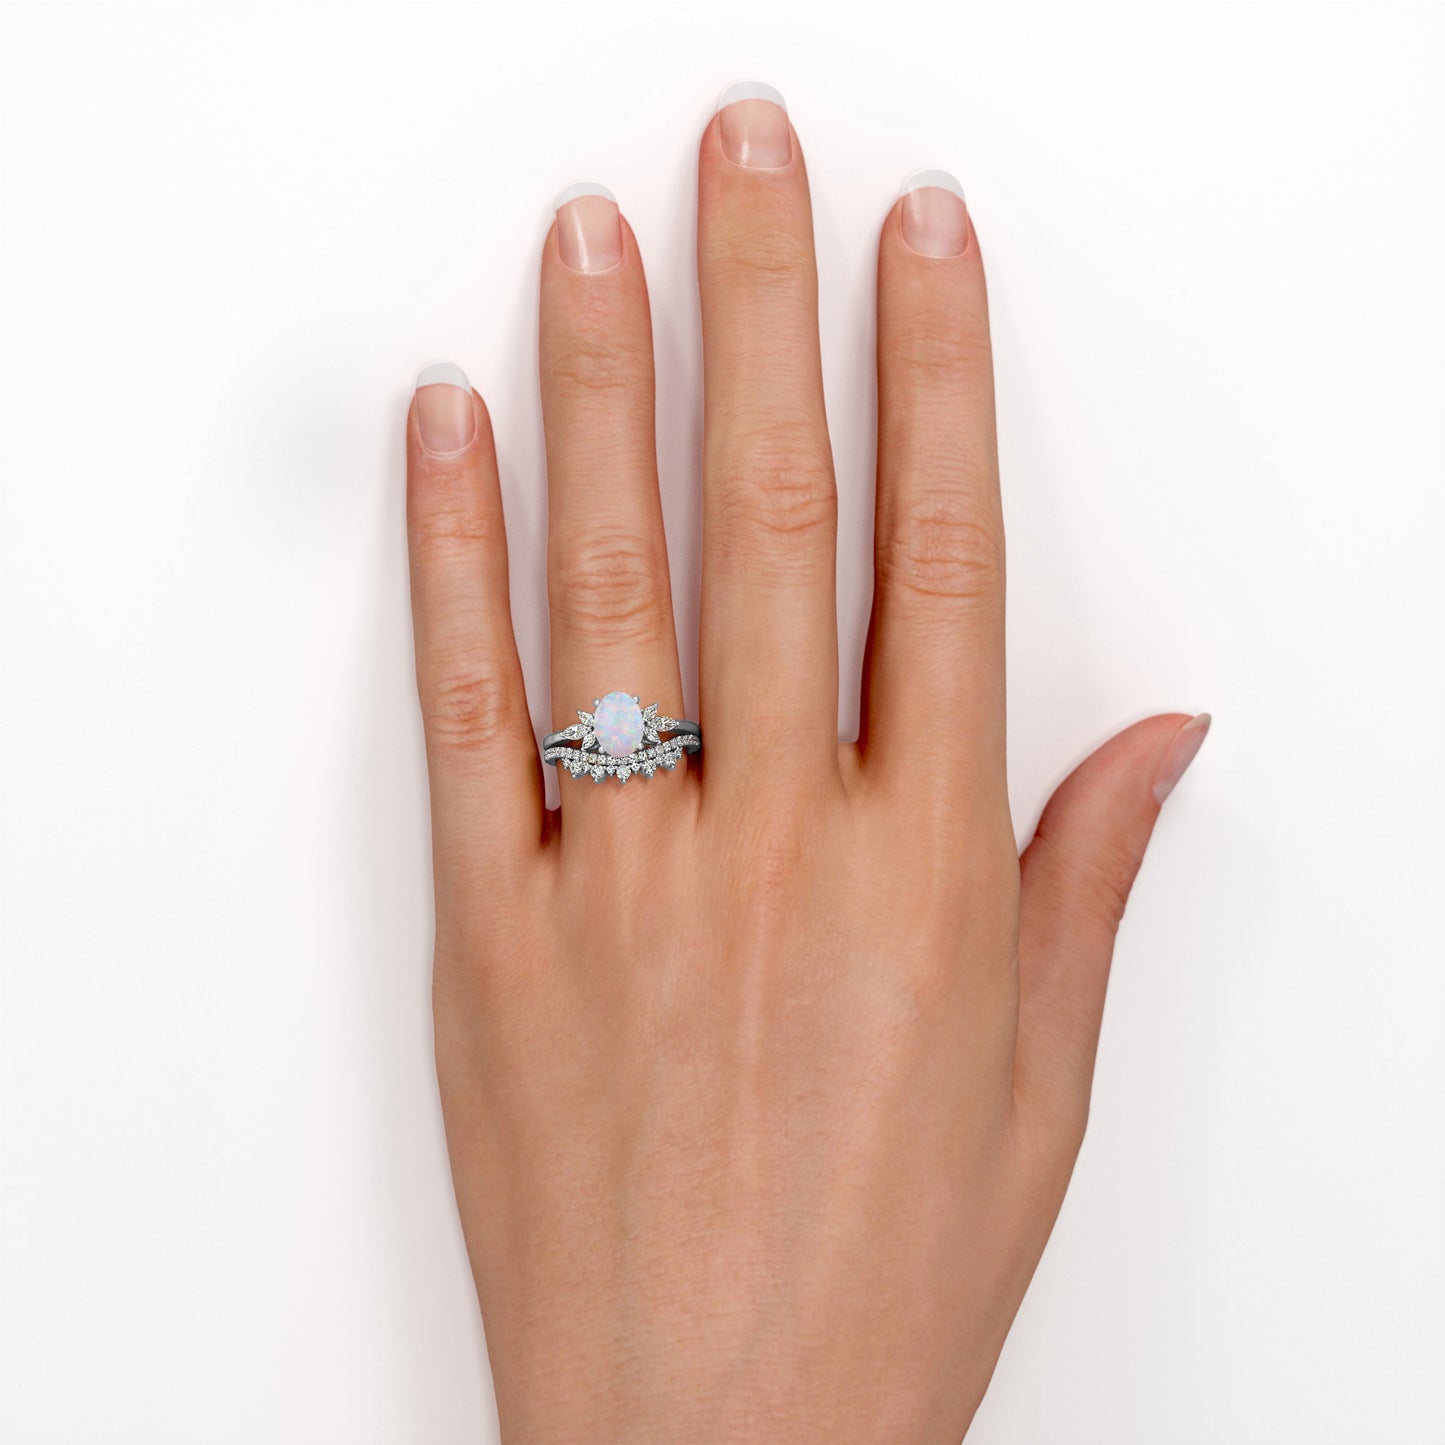 Chevron Crown 1.45 carat Oval cut Australian Opal and diamond vintage royal engagement rings set in White gold-Bridal set